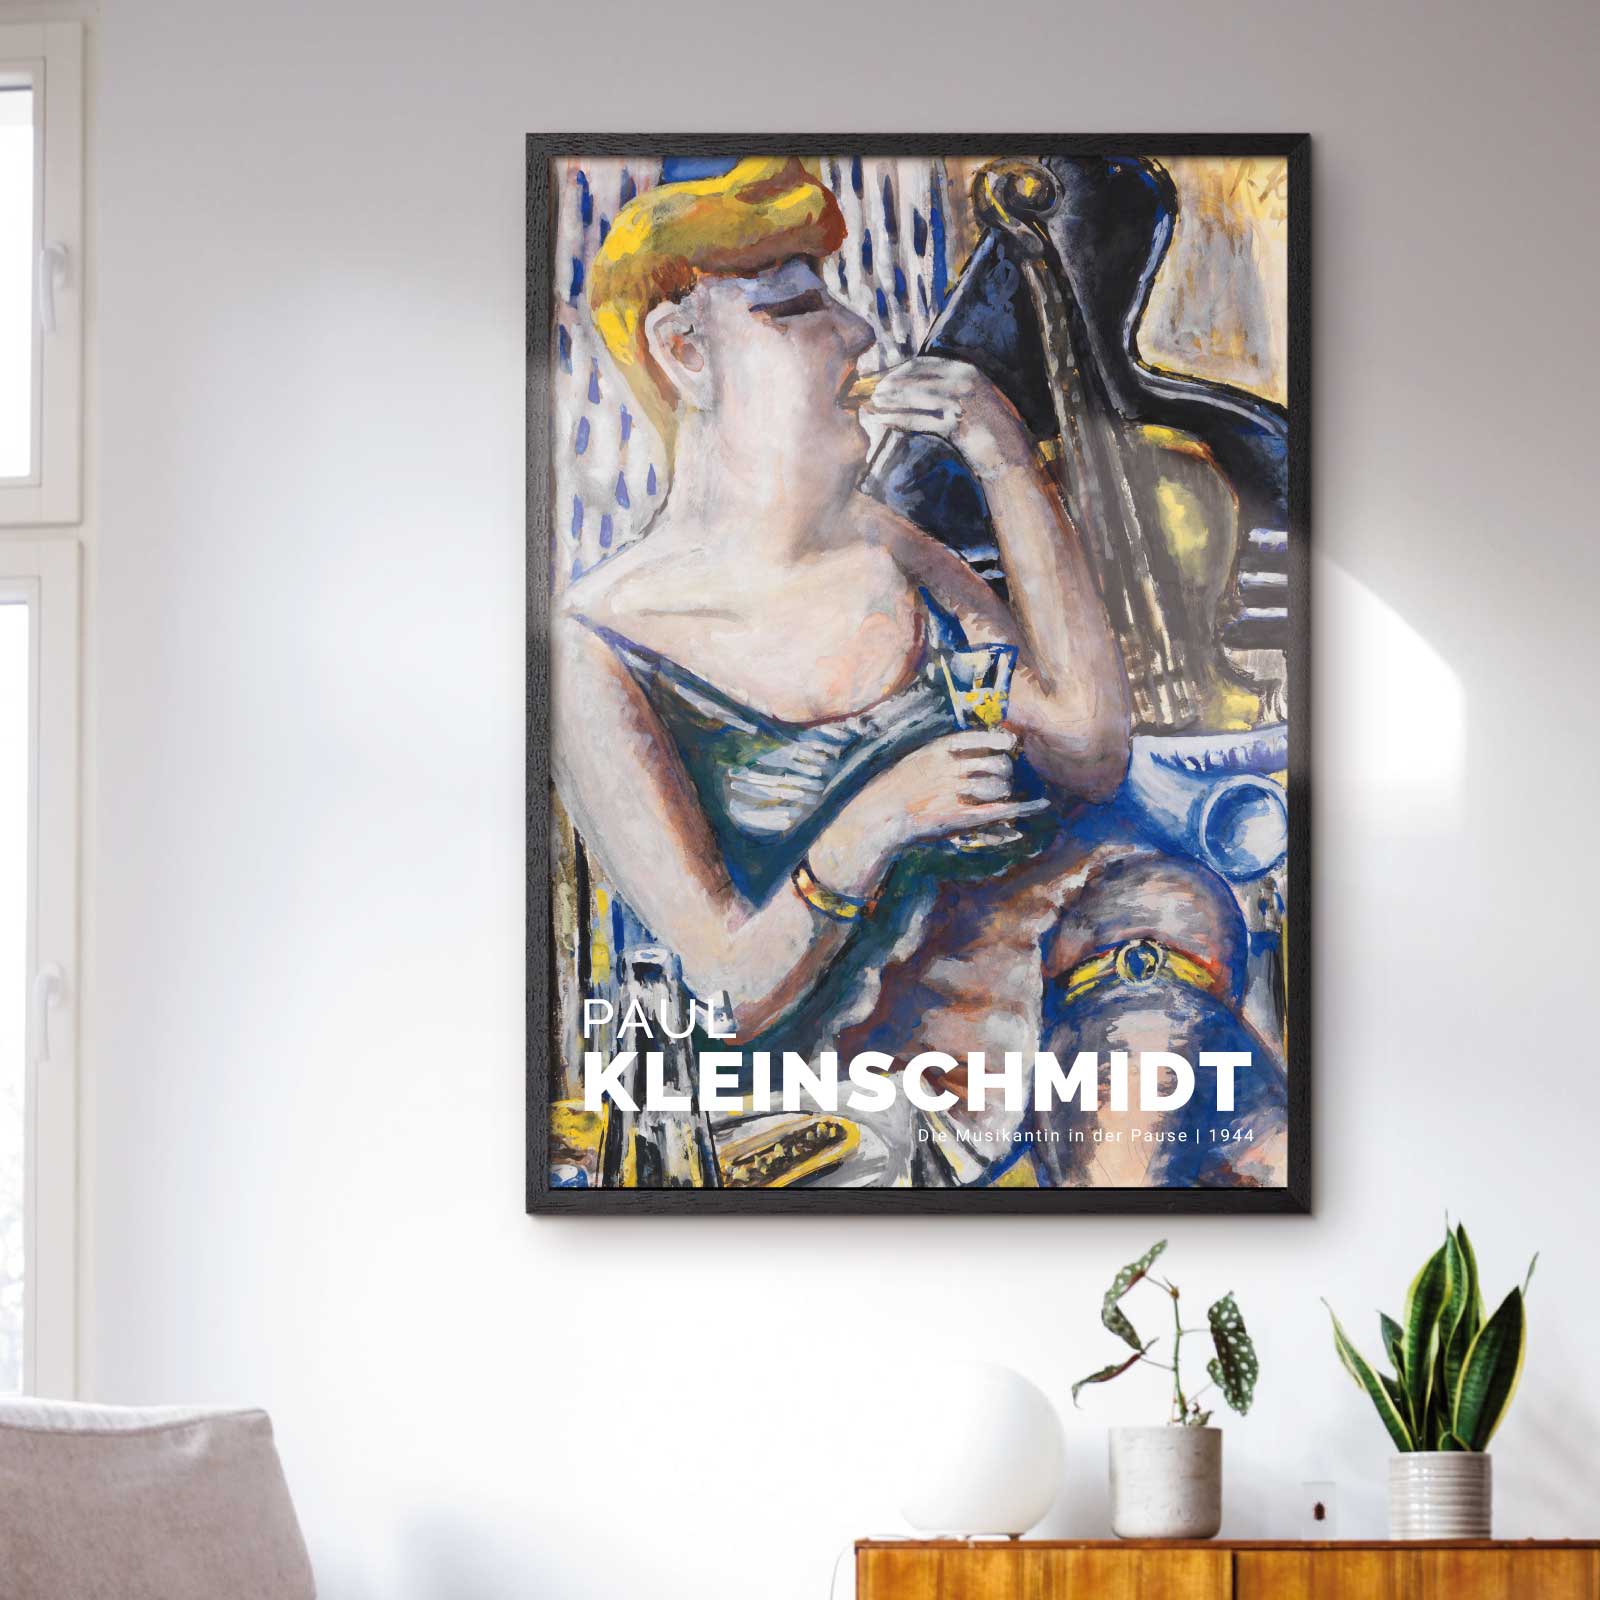 Art poster featuring Paul Kleinschmidt "Die Musikantin in der Pause "